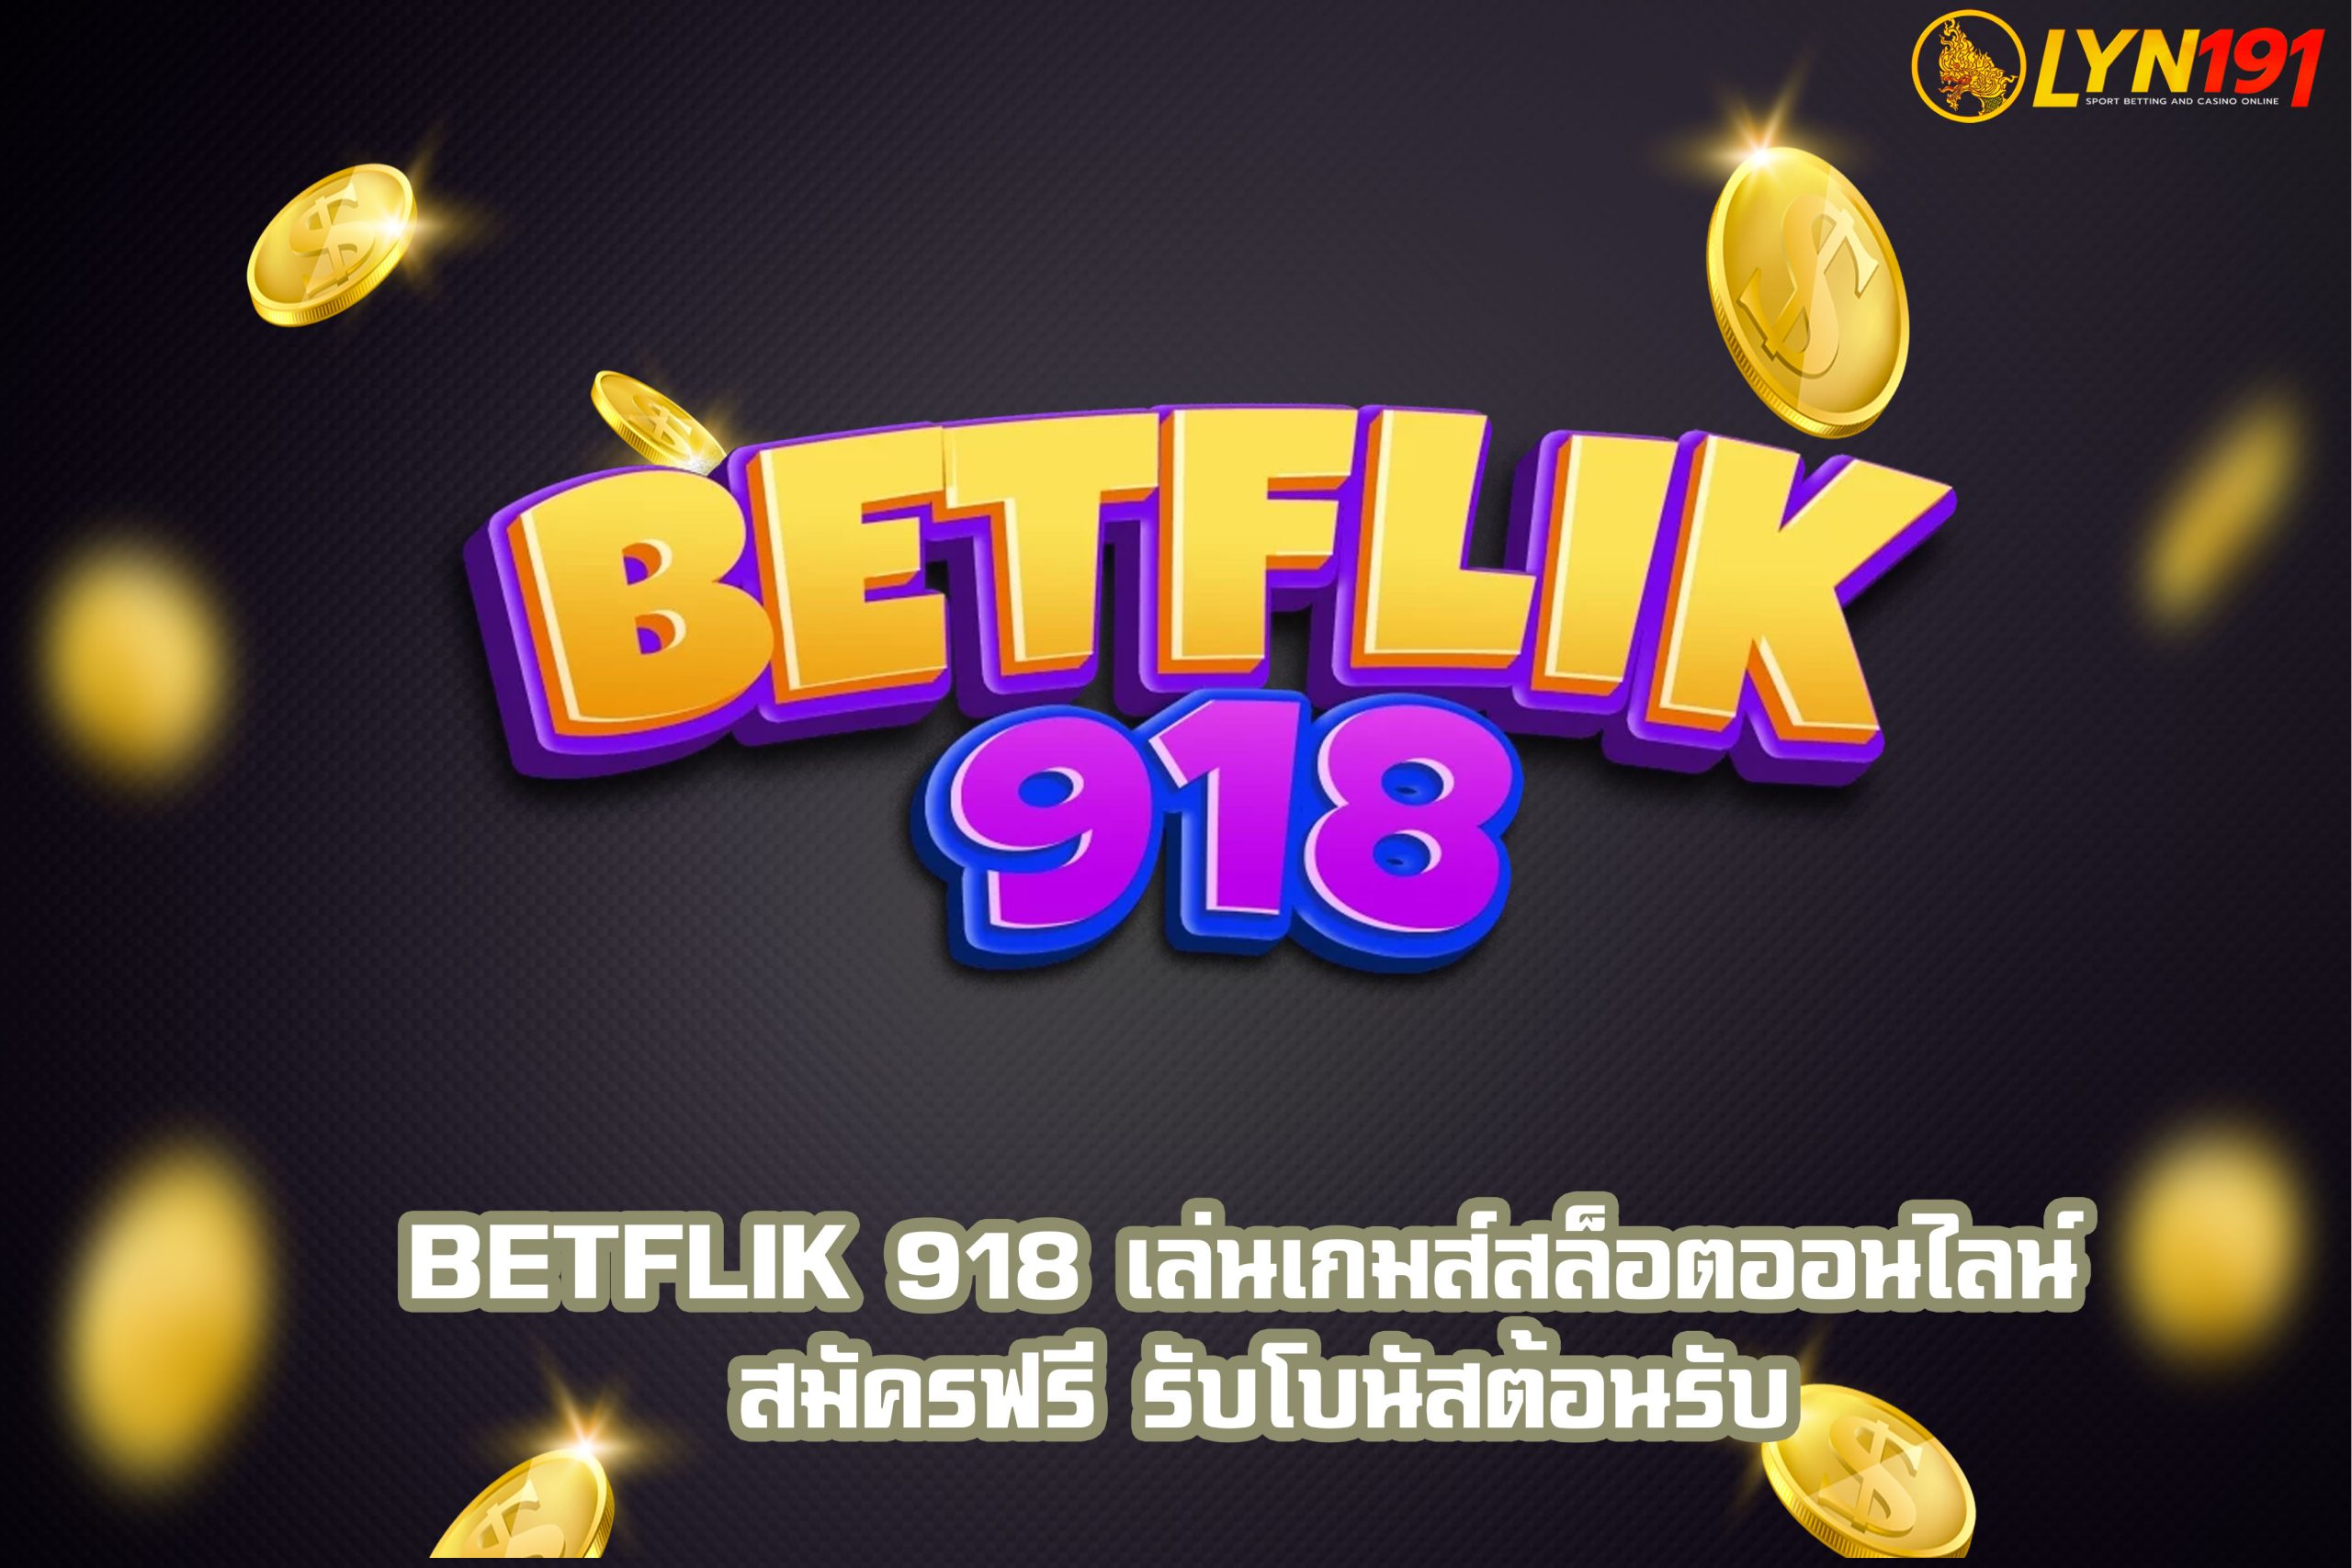 BETFLIK 918